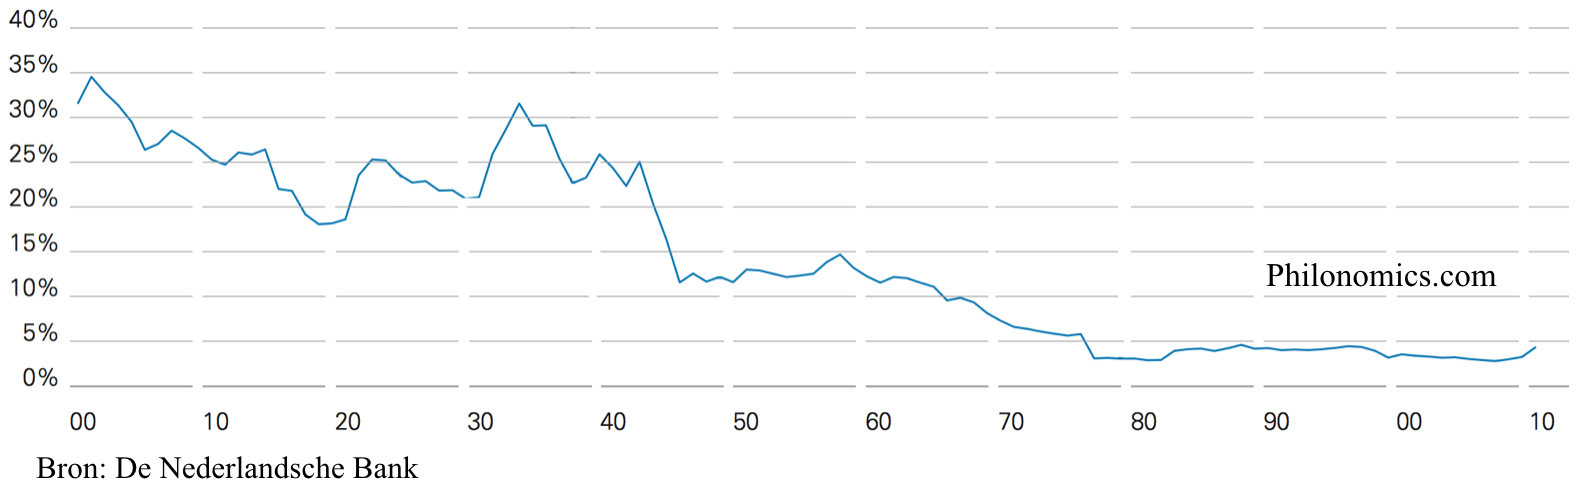 Leverage Ratio Nederlandse Banken 1900-2010